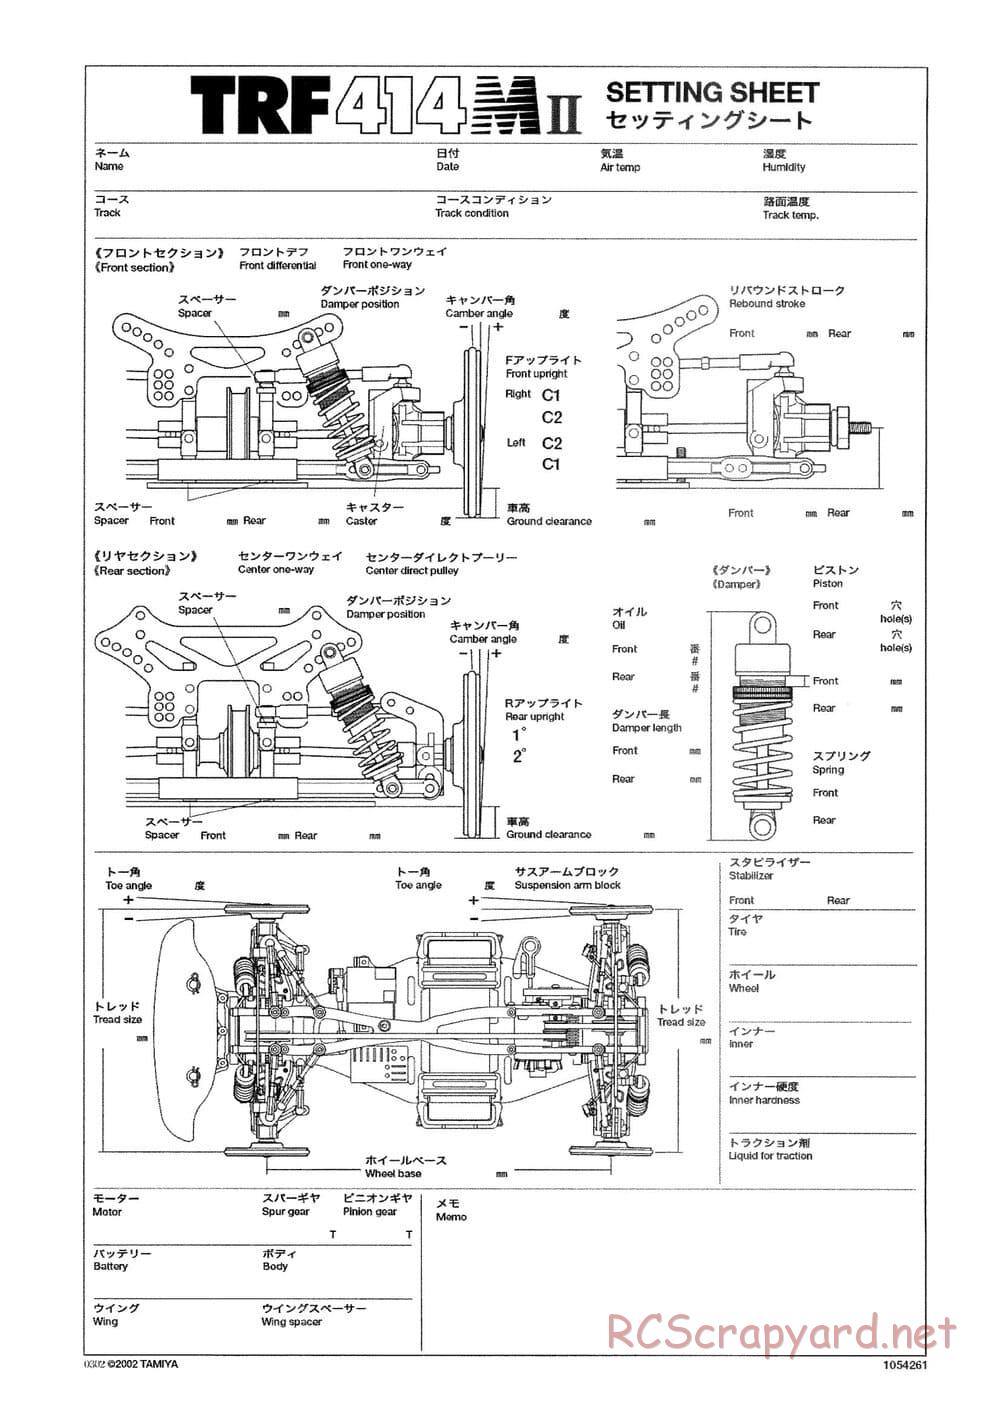 Tamiya - TRF414M II Chassis - Manual - Page 25